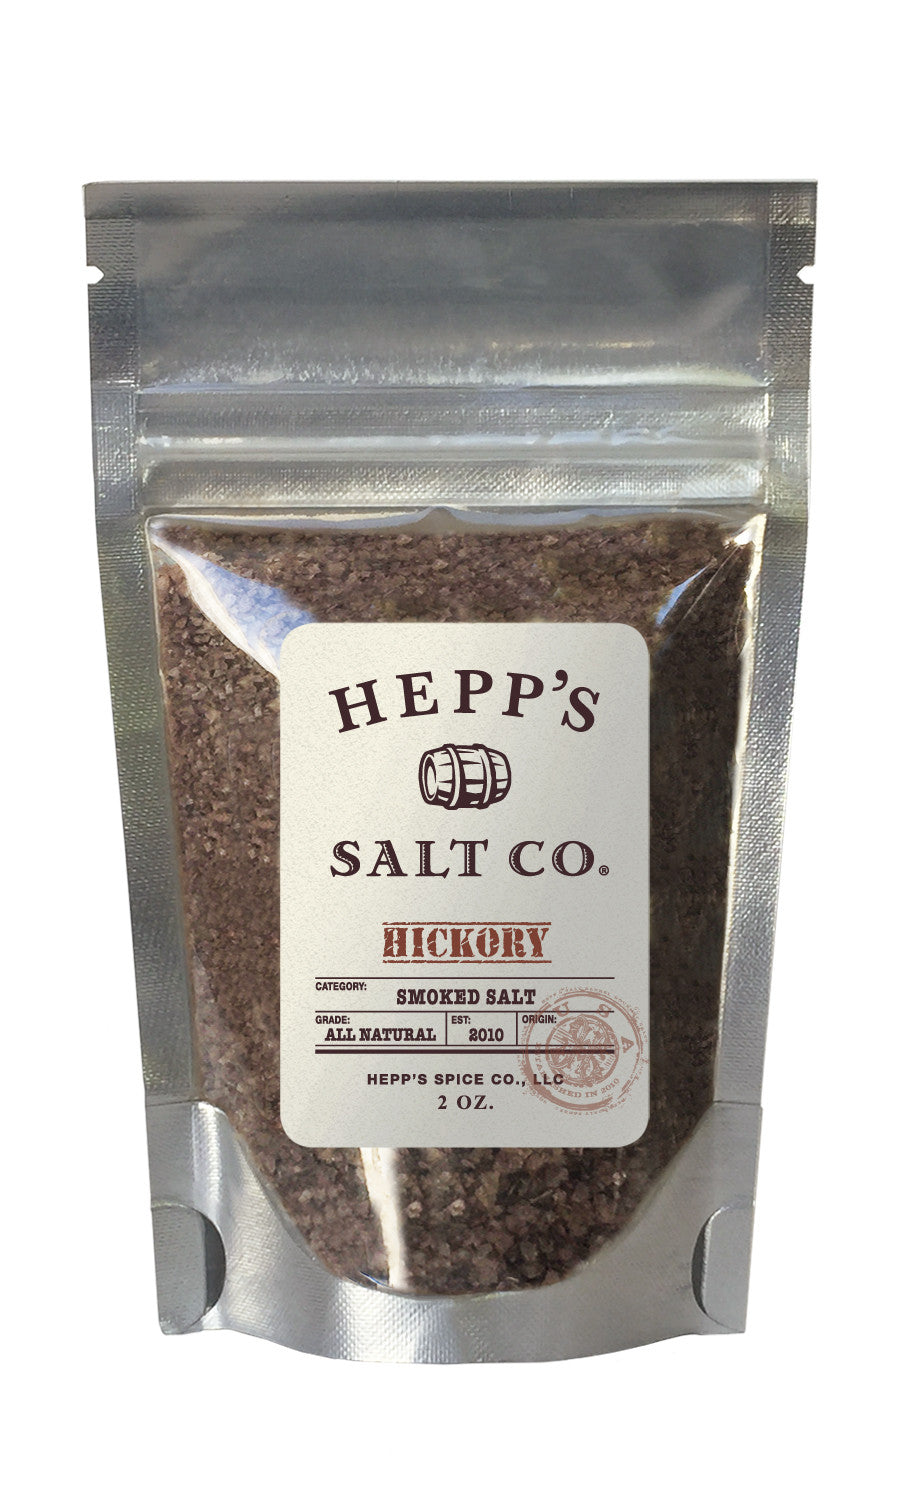 Hickory Smoked Sea Salt - HEPPS SALT CO. 